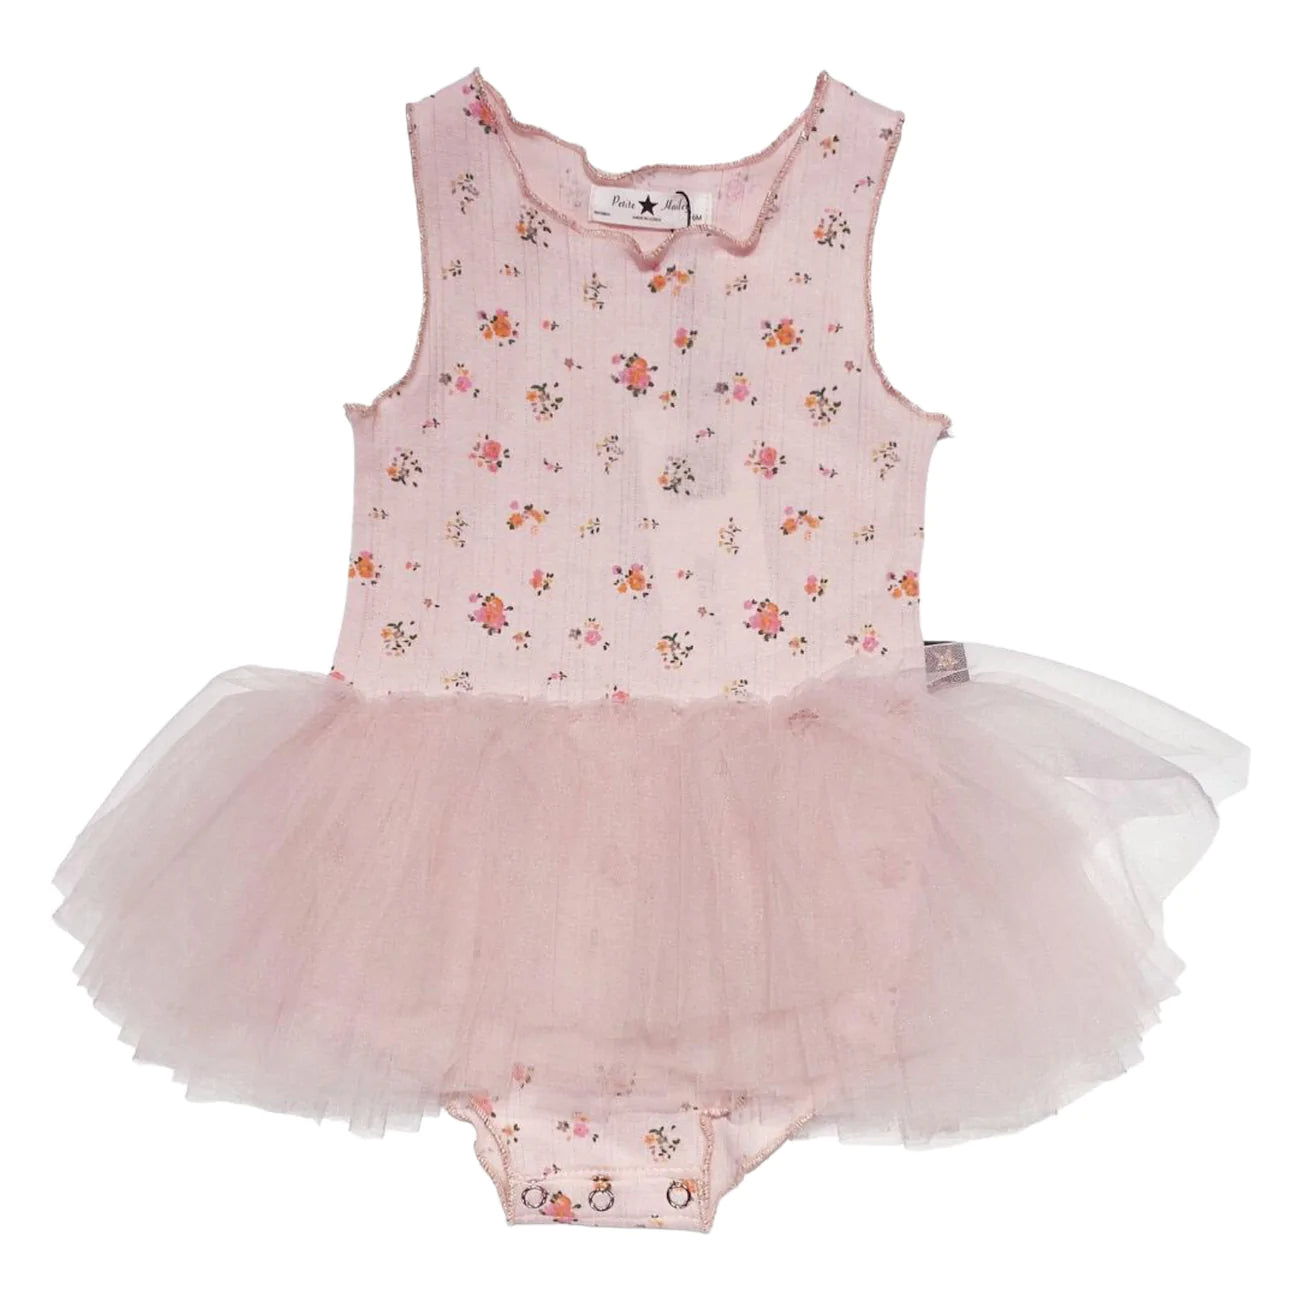 BABY VINTAGE FLOWER PINK TUTU DRESS